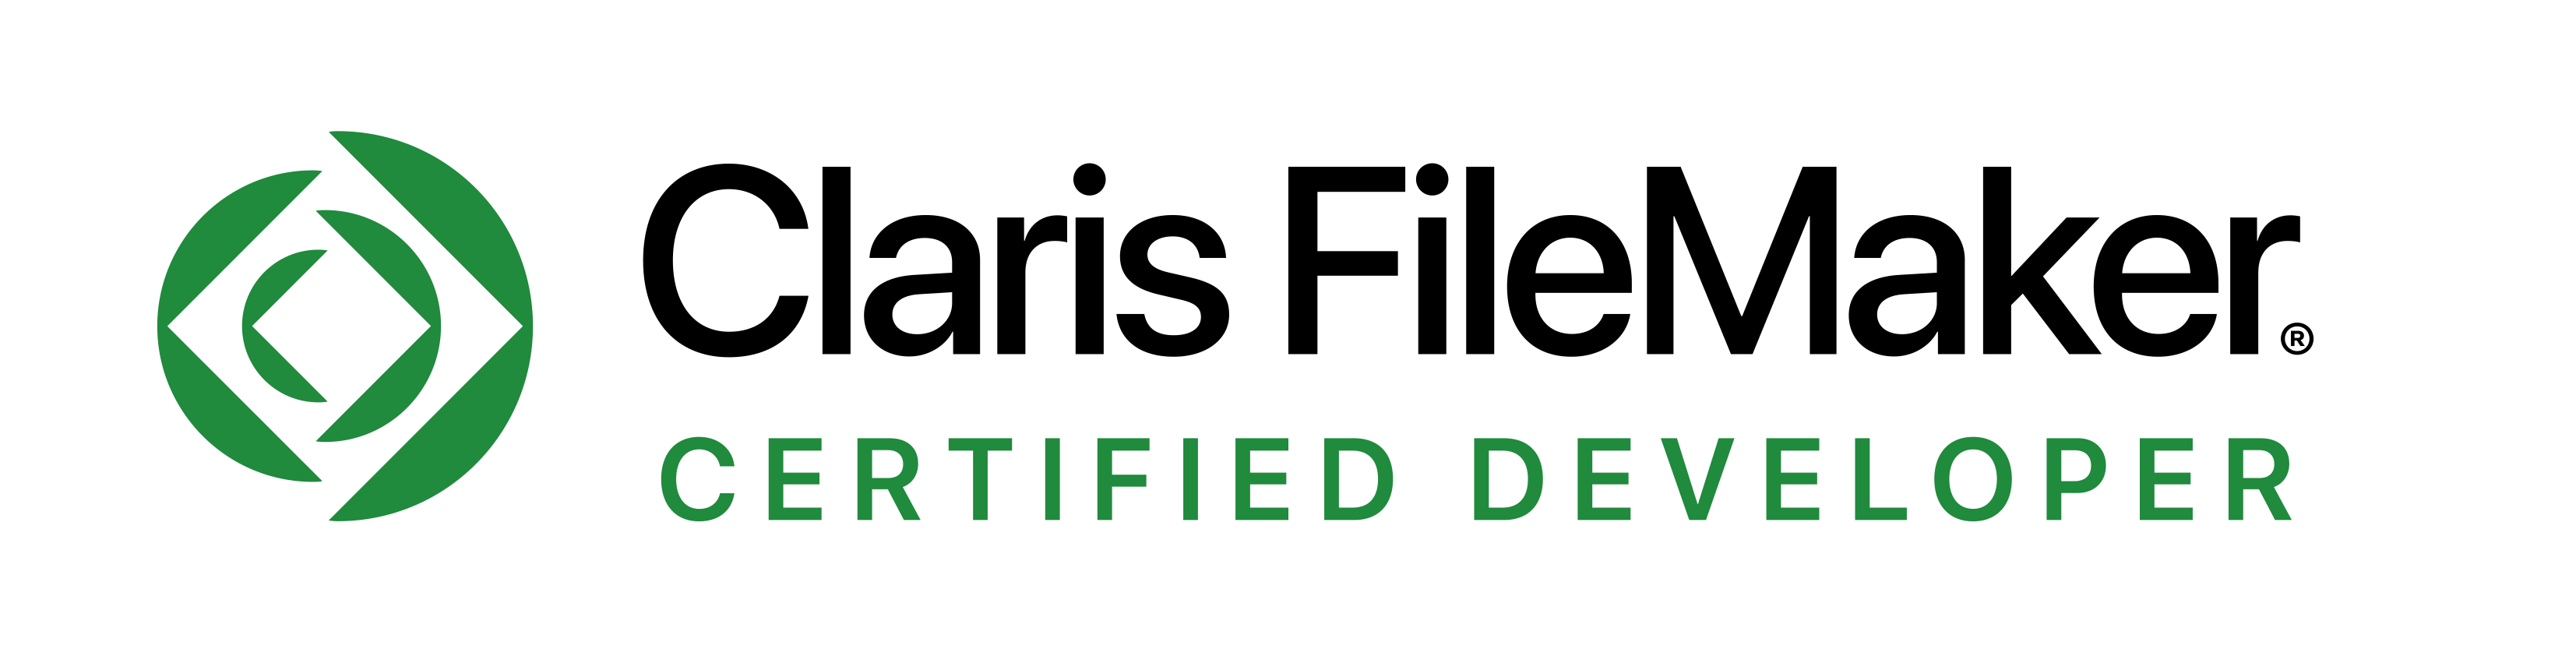 Claris FileMaker Certified